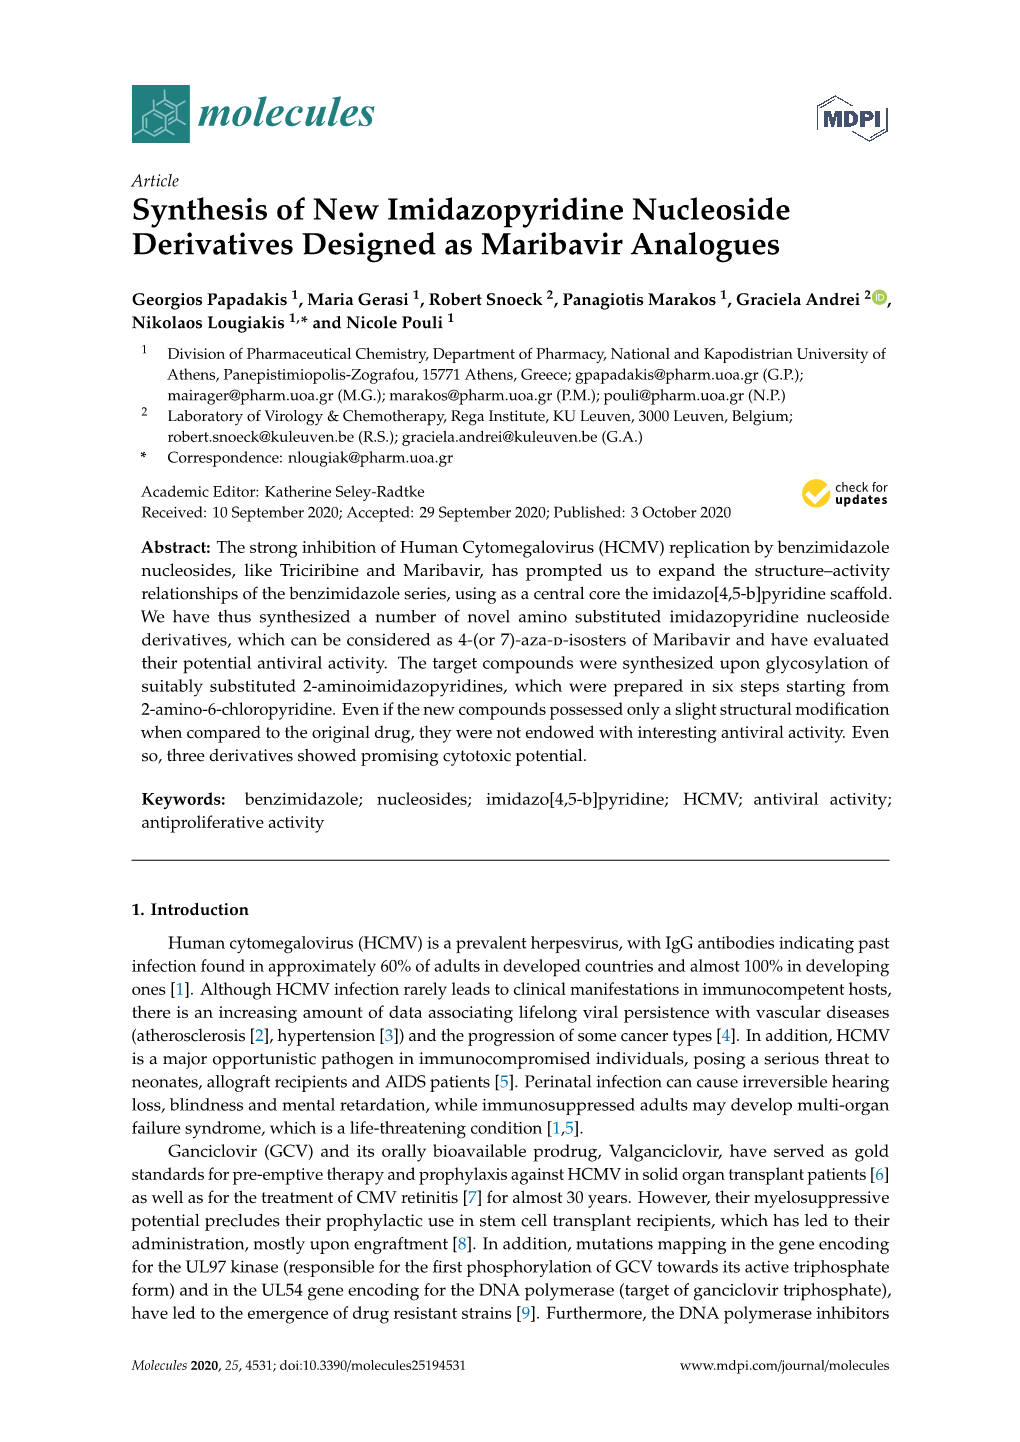 Synthesis of New Imidazopyridine Nucleoside Derivatives Designed As Maribavir Analogues